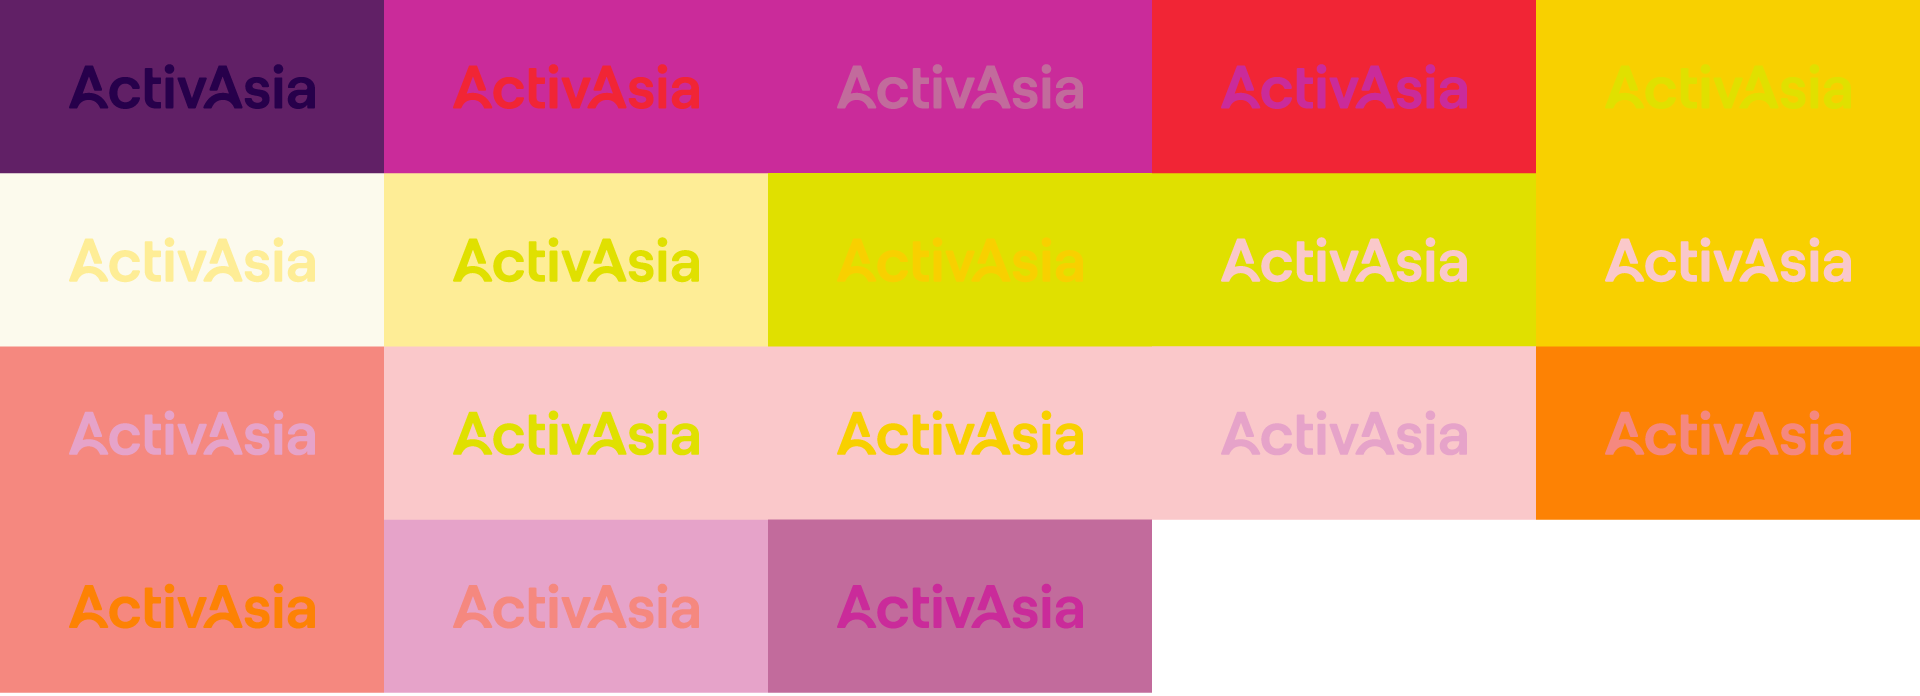 ActivAsia---Color-Misuse.png